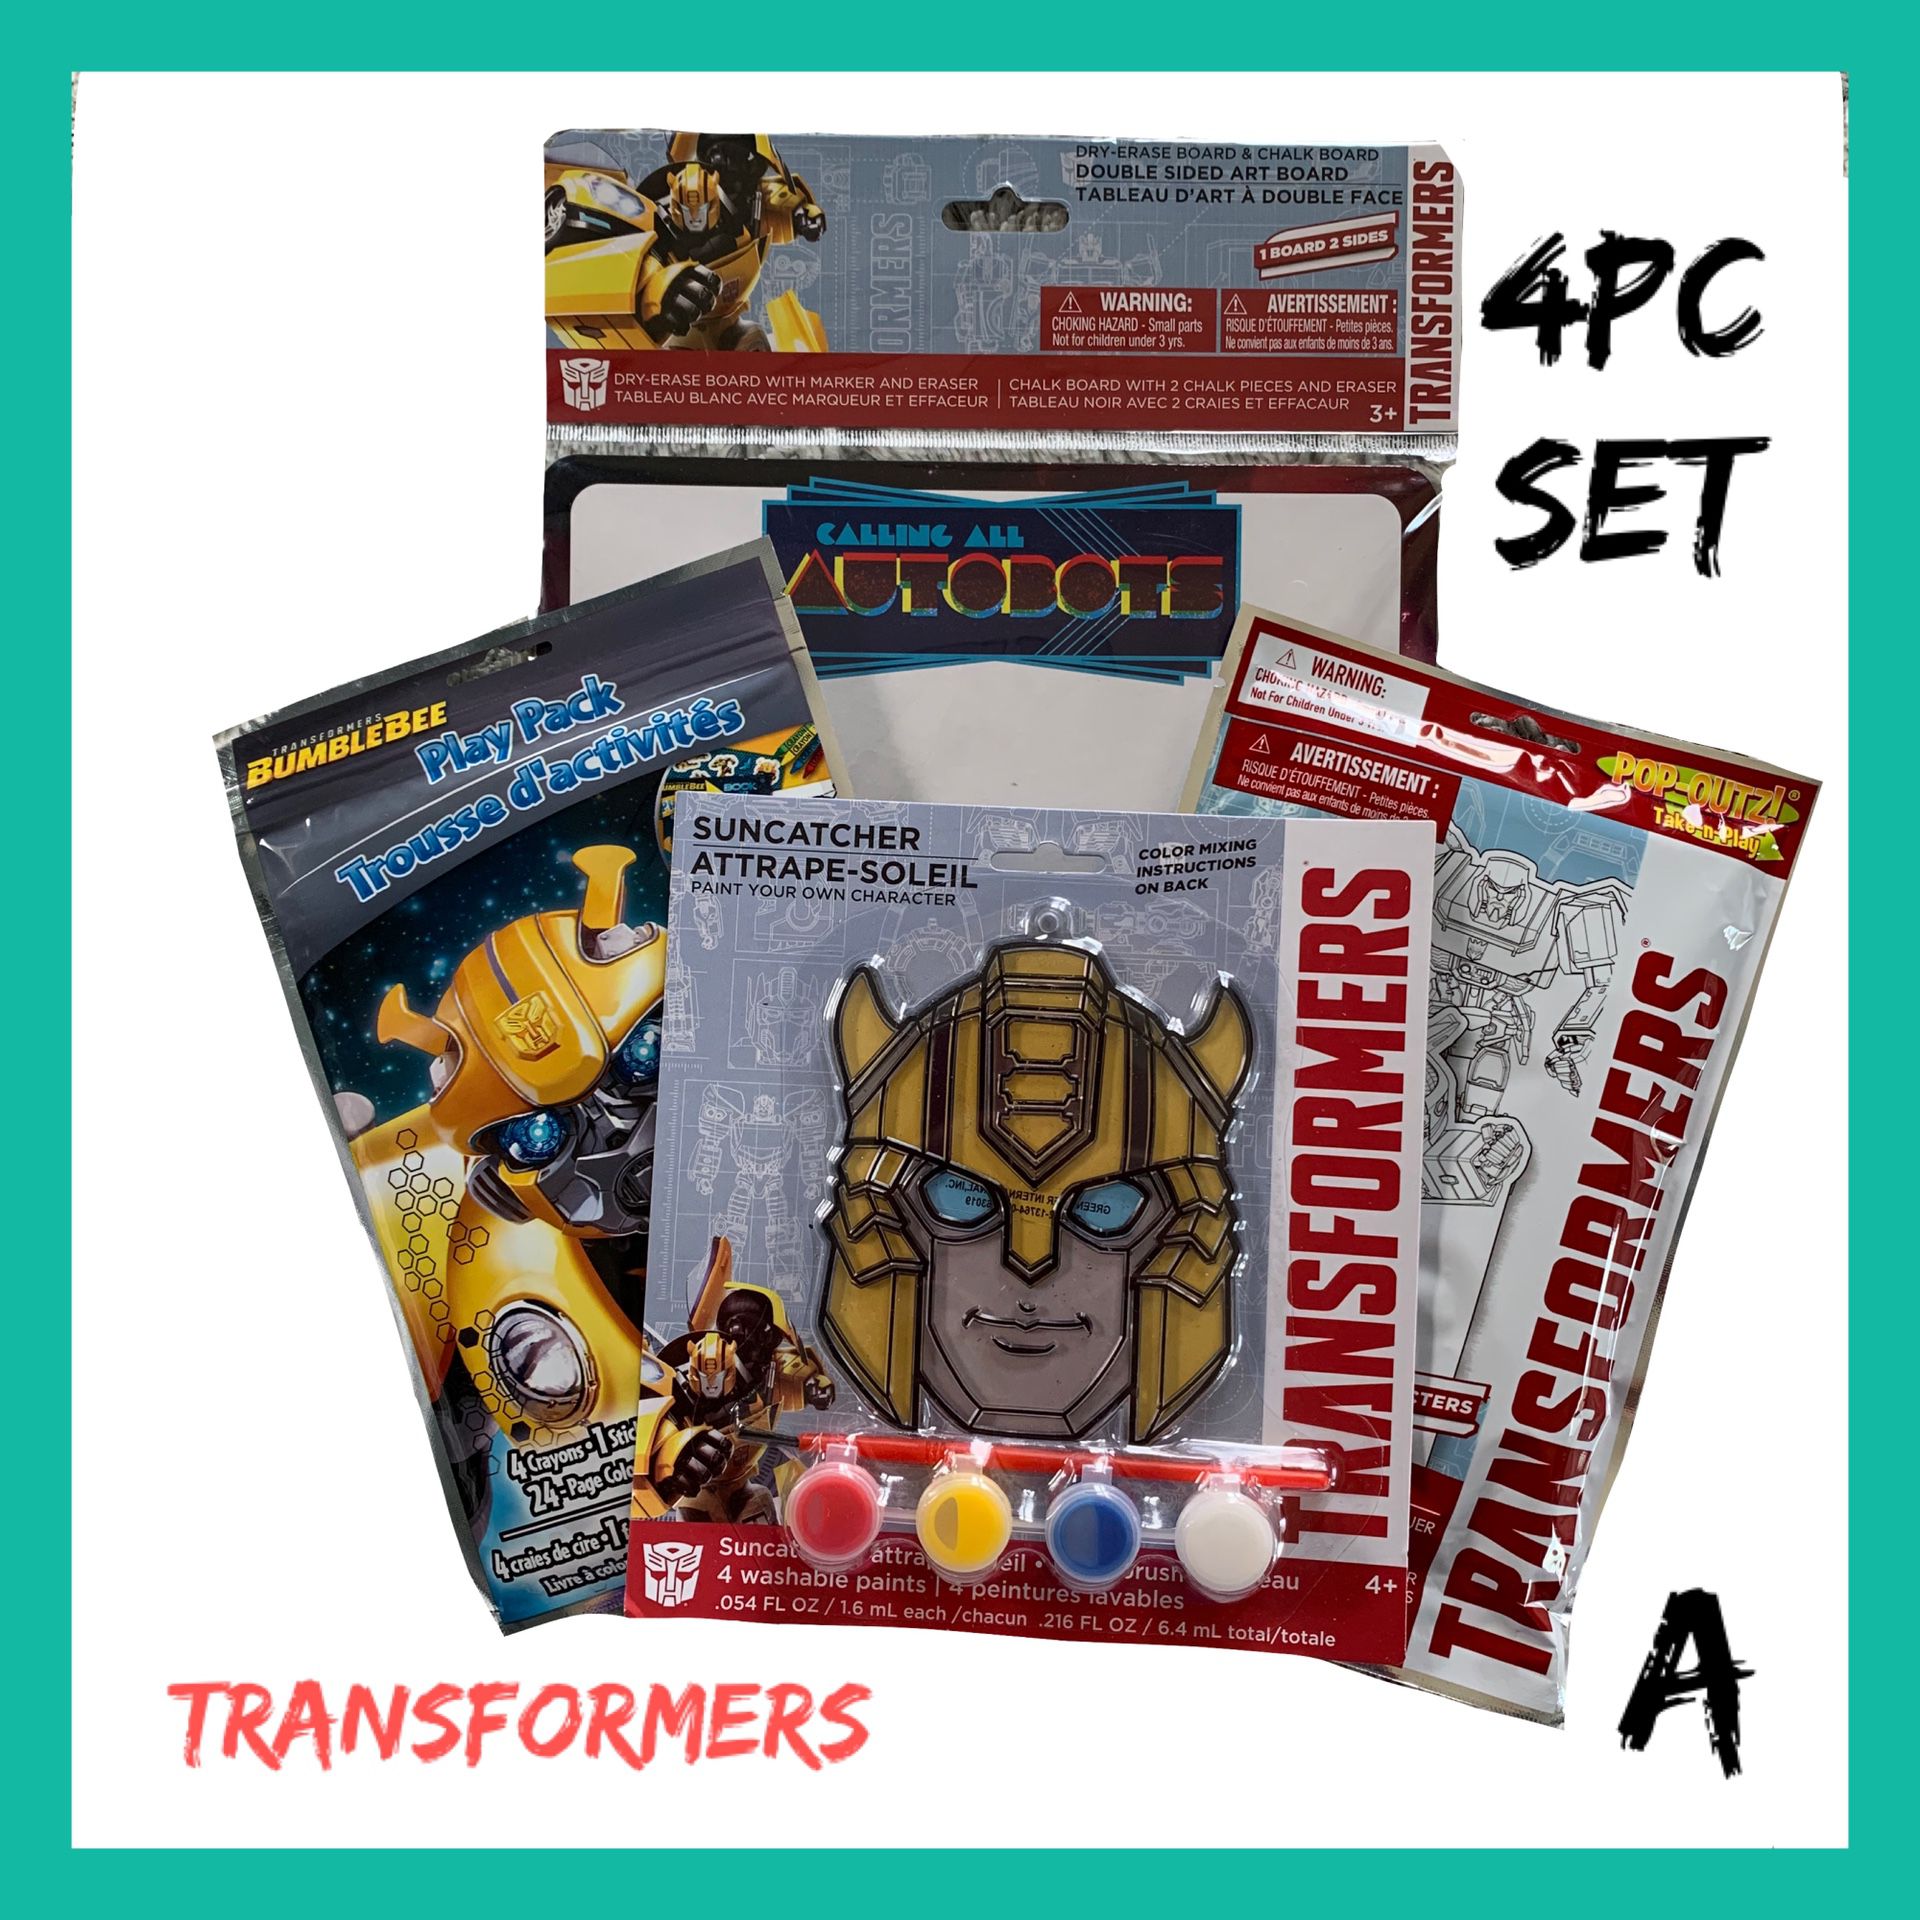 NIB Transformers 4pc Gift Set A